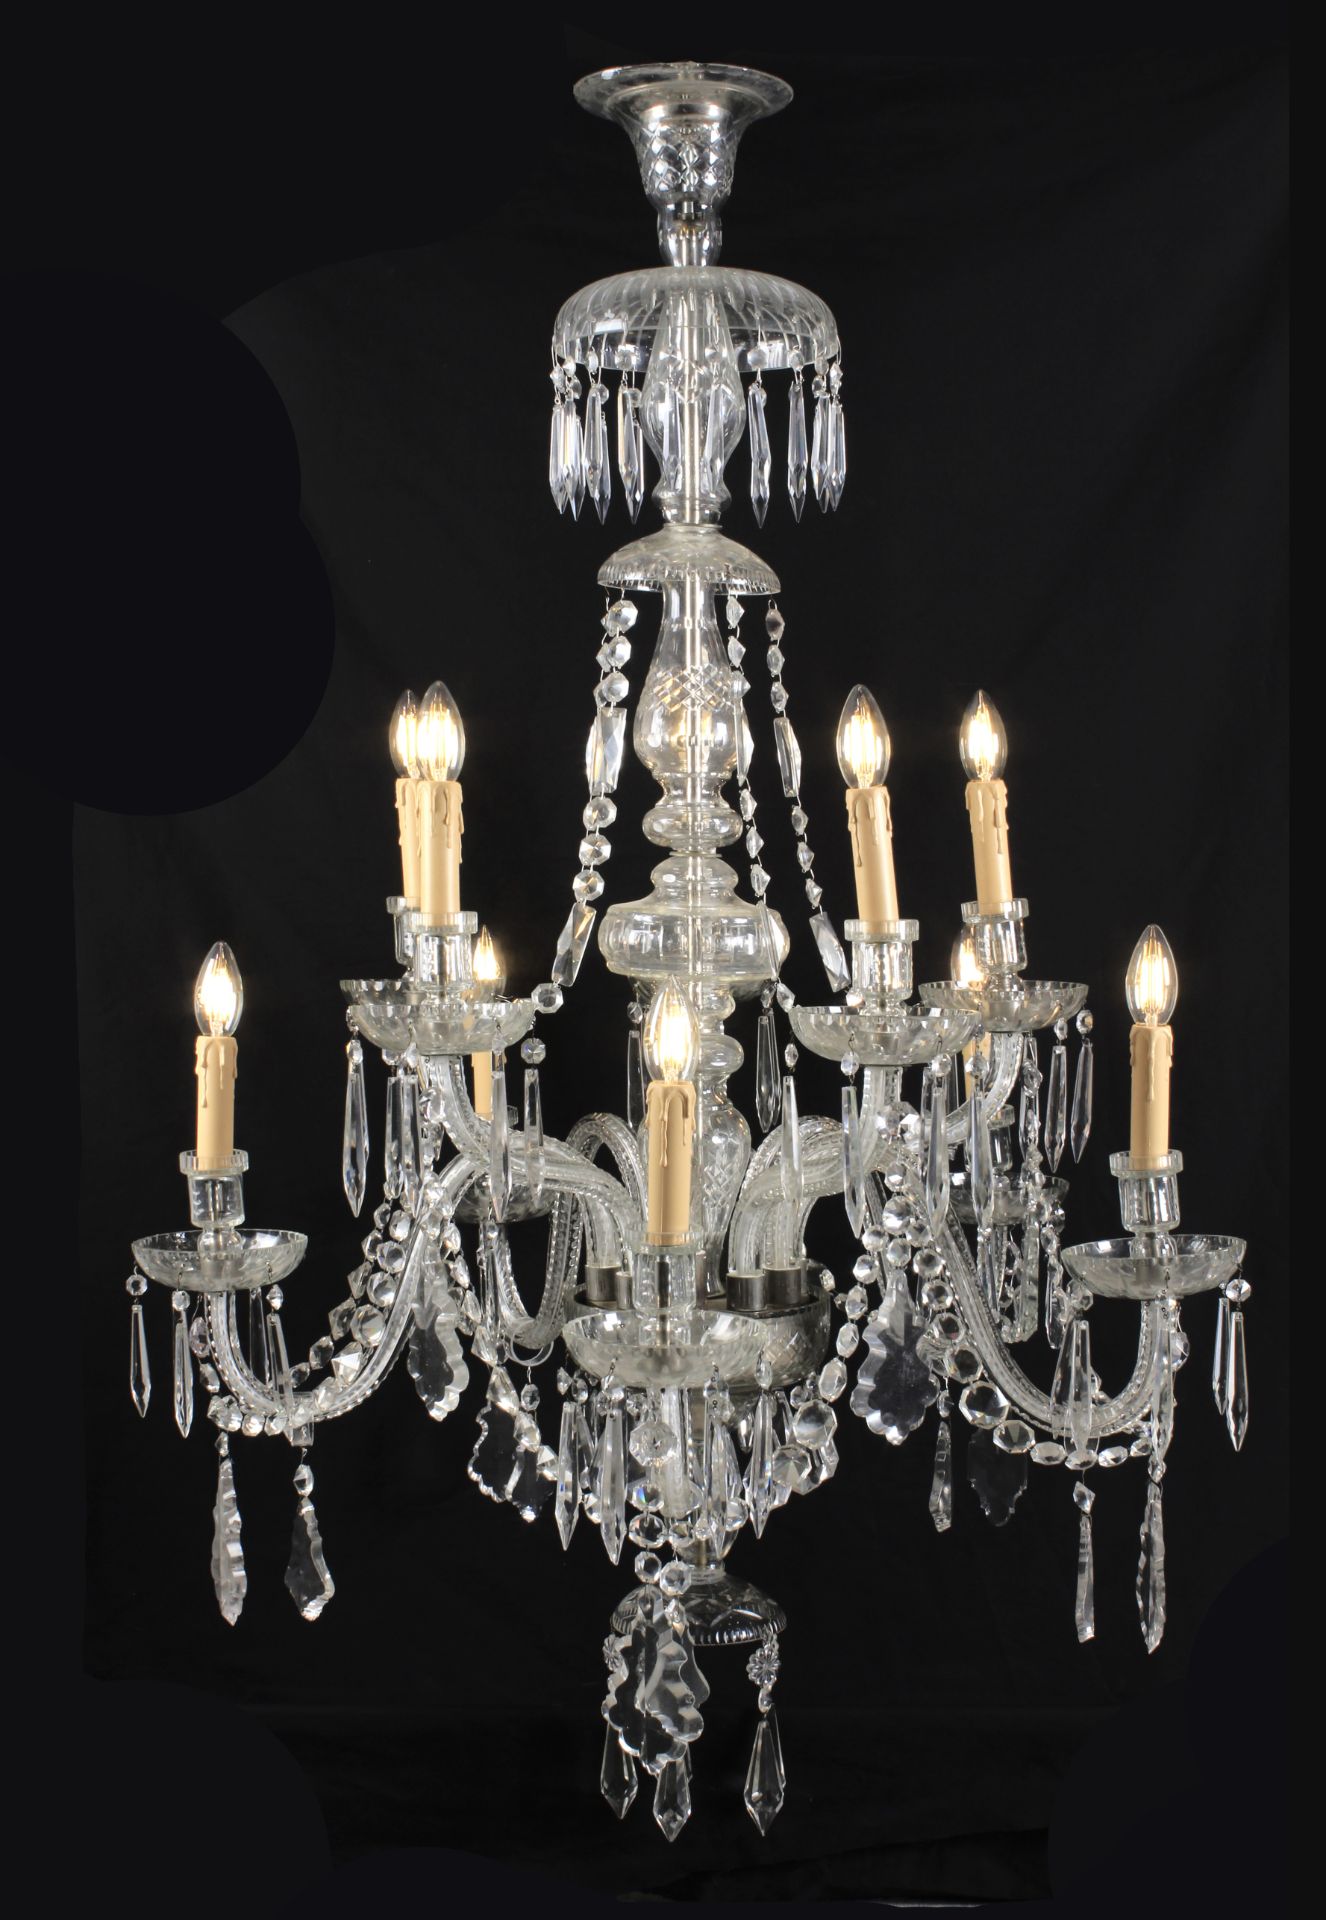 A 20th century gilt bronze anf glass beads chandelier